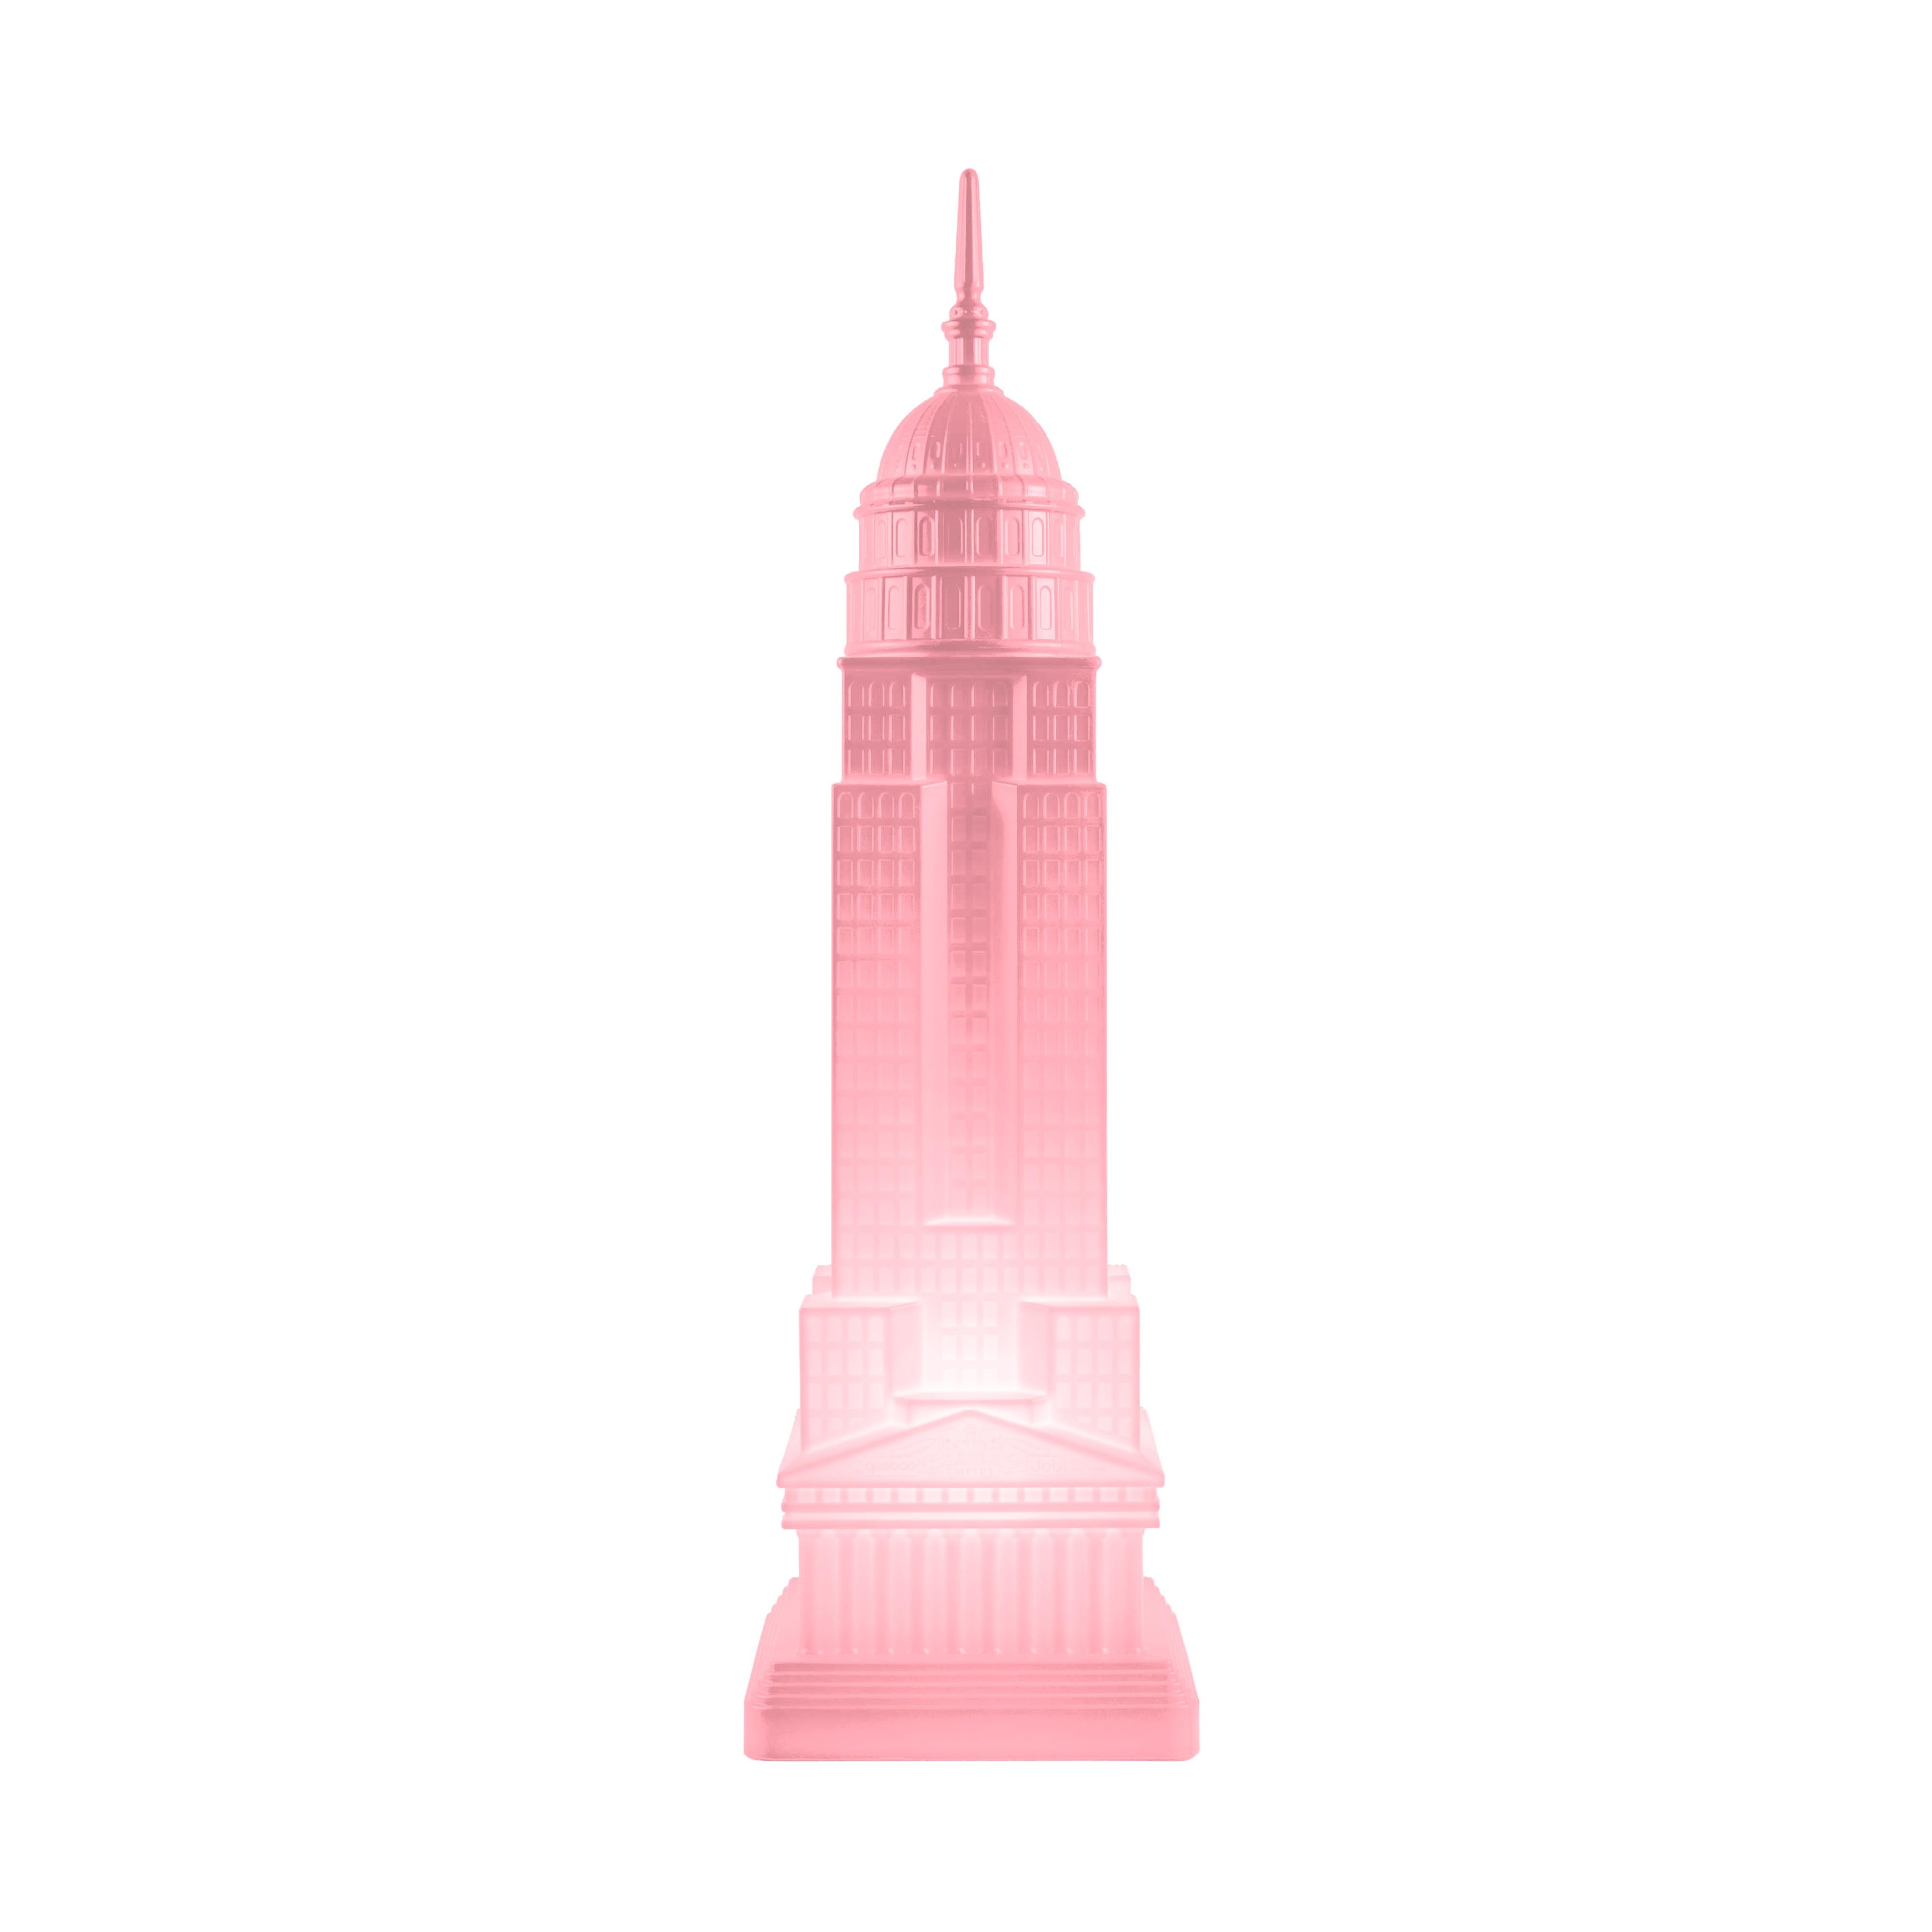 En vente : Pink Lampe de table ou lampadaire moderne Empire State, blanc, rose ou bleu